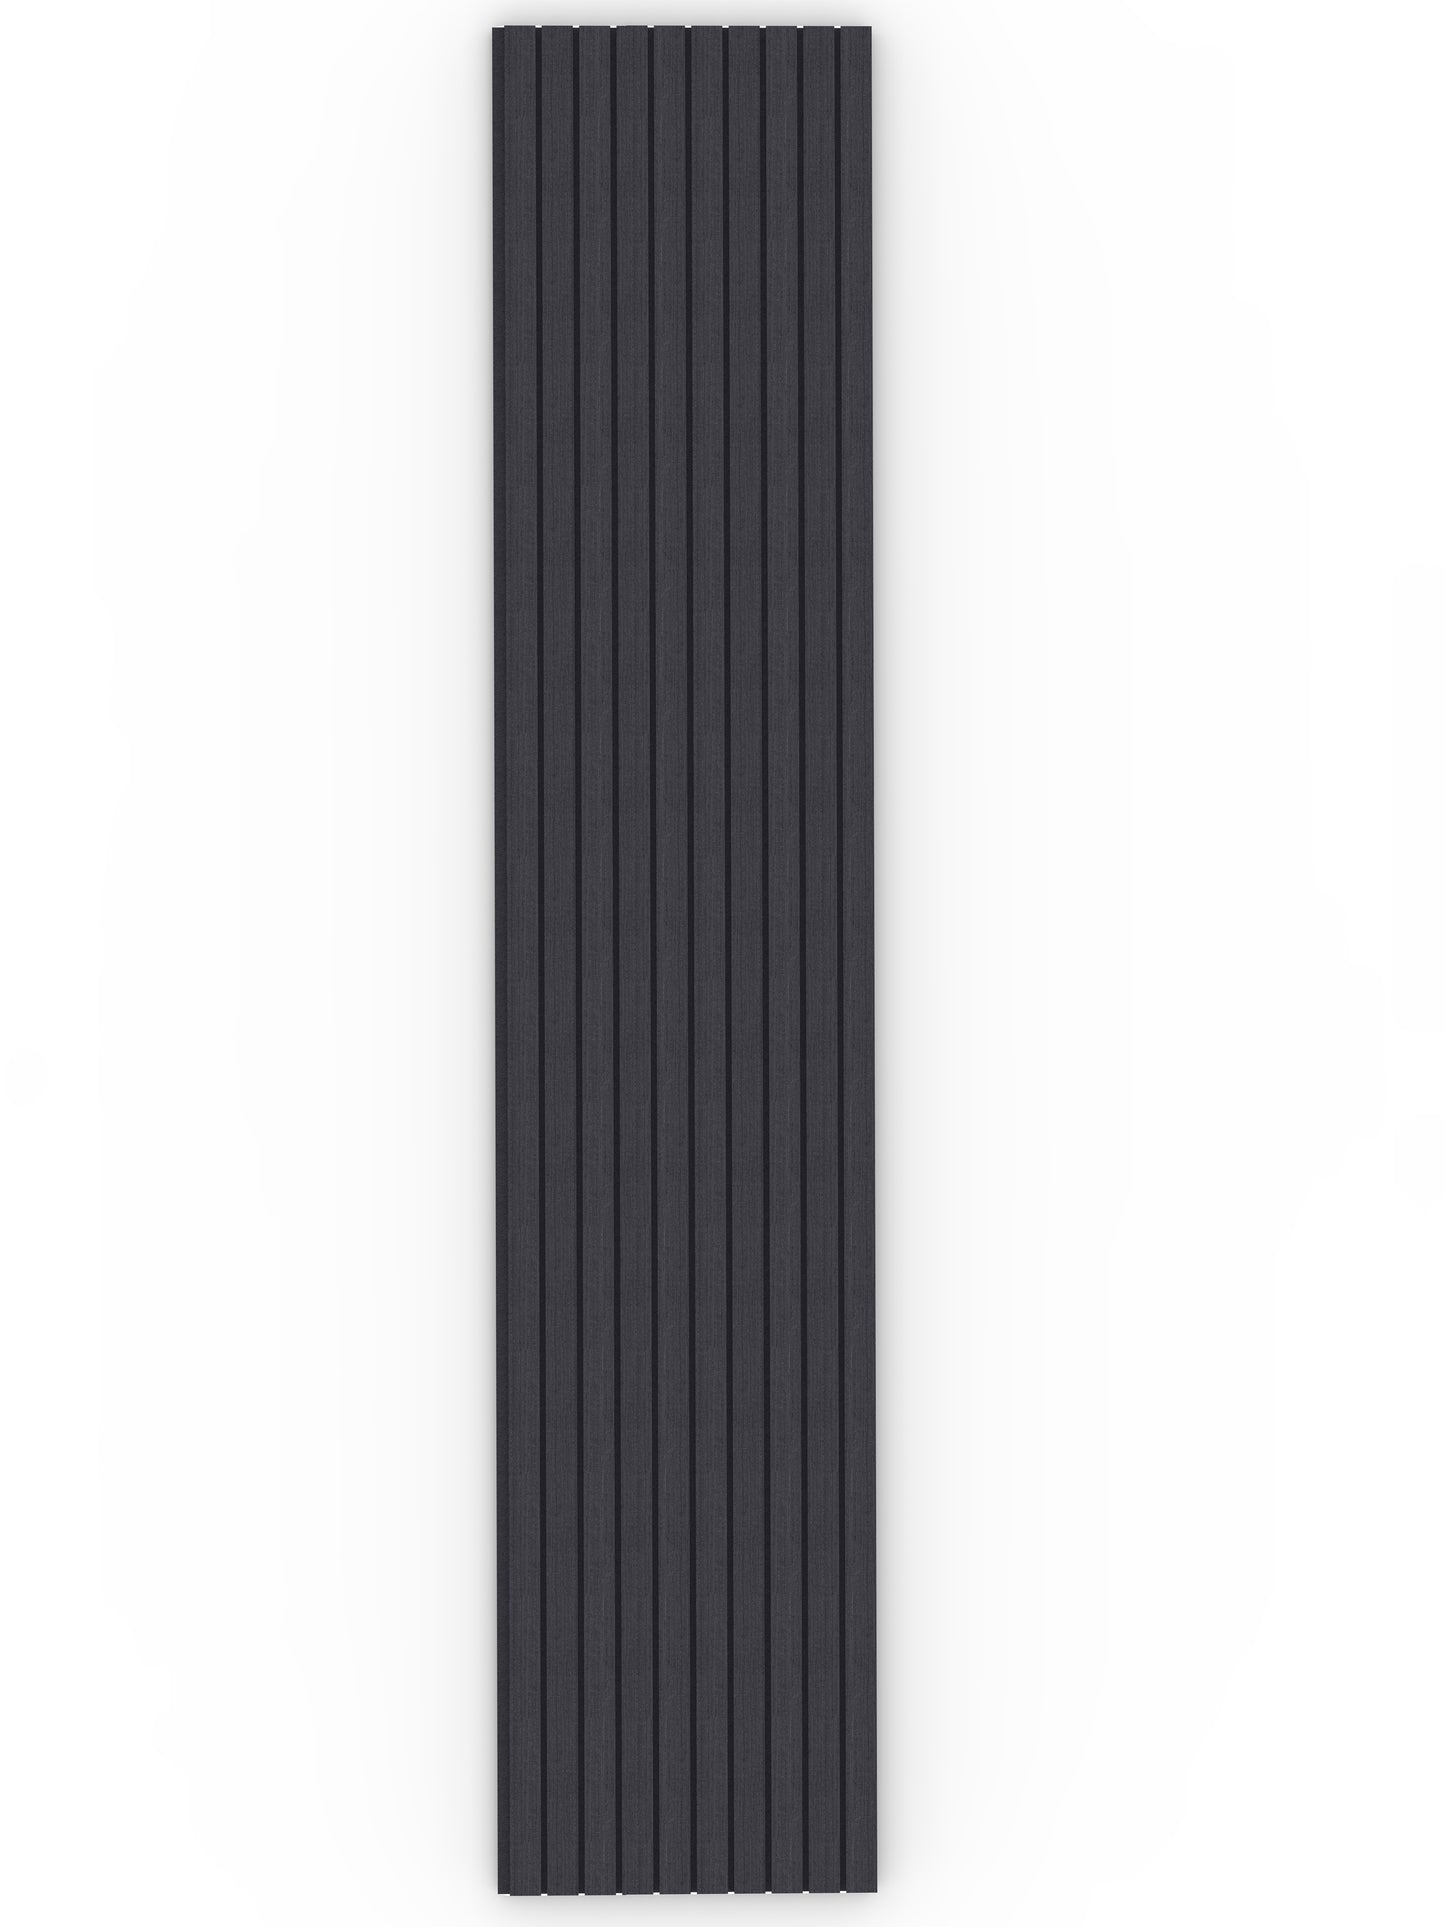 Black Acoustic Wood Wall Panel Wide Slat Series 2 - 240x60cm